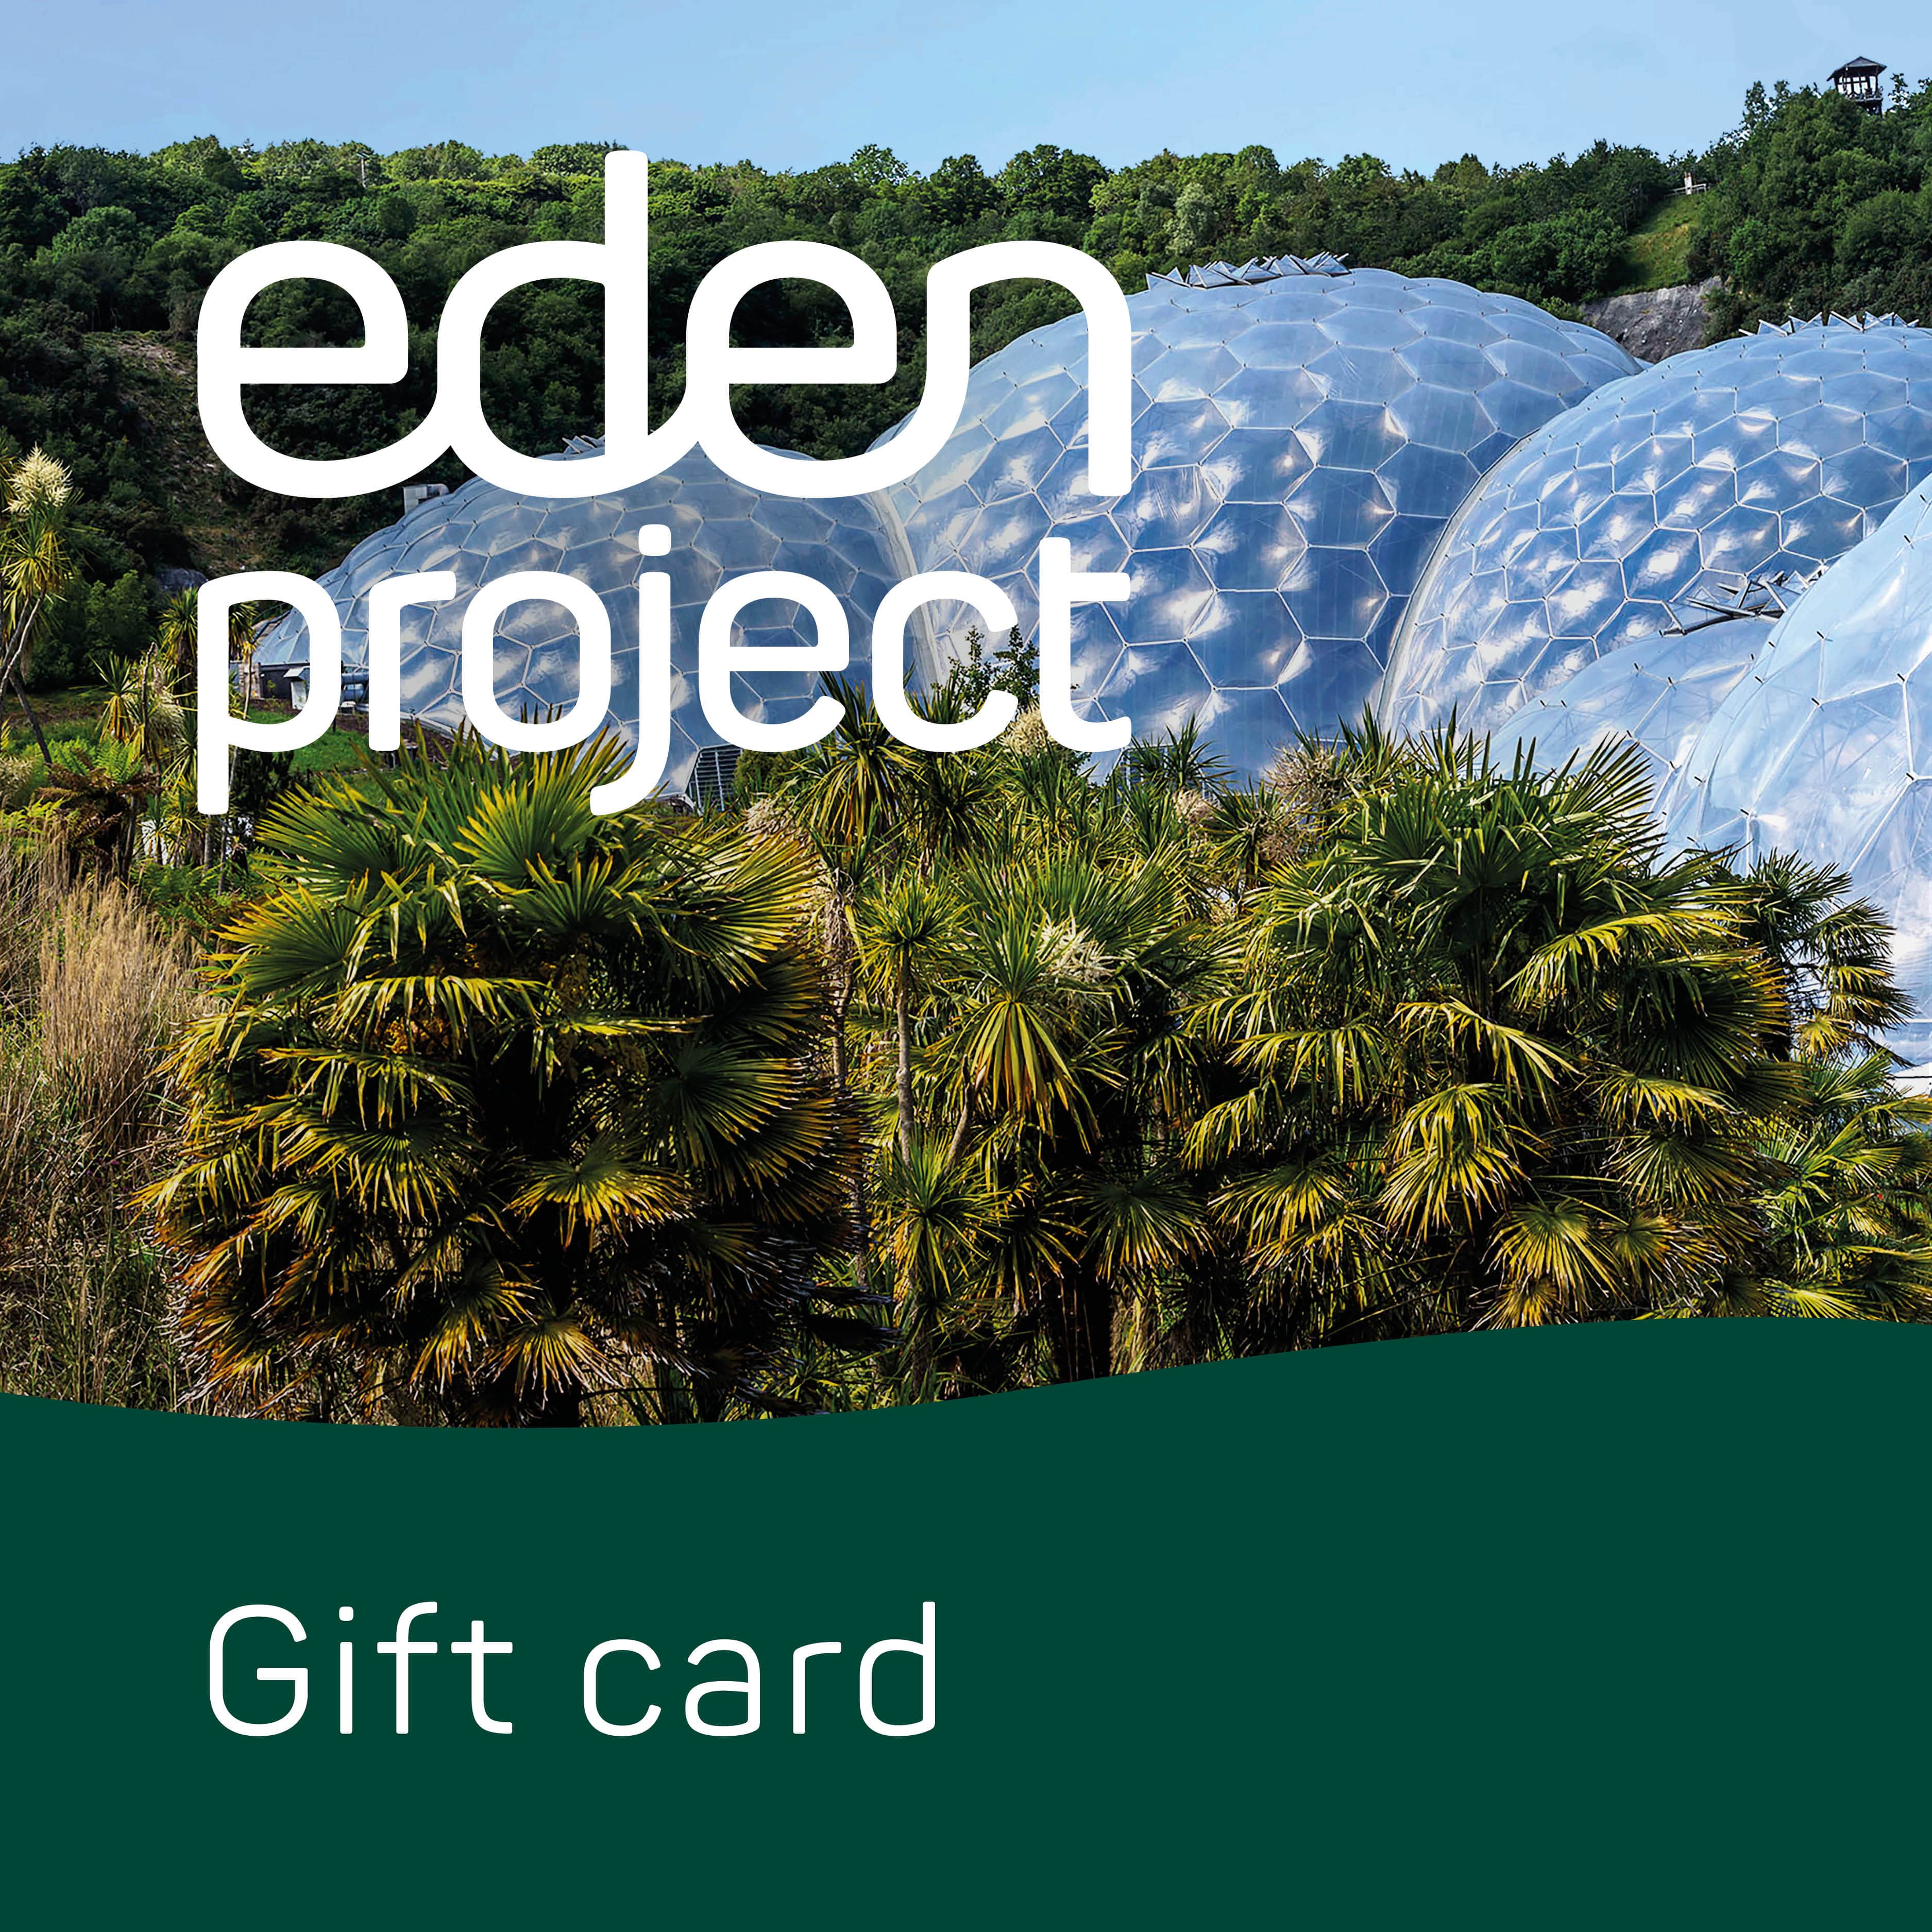 Eden Project Shop Gift card